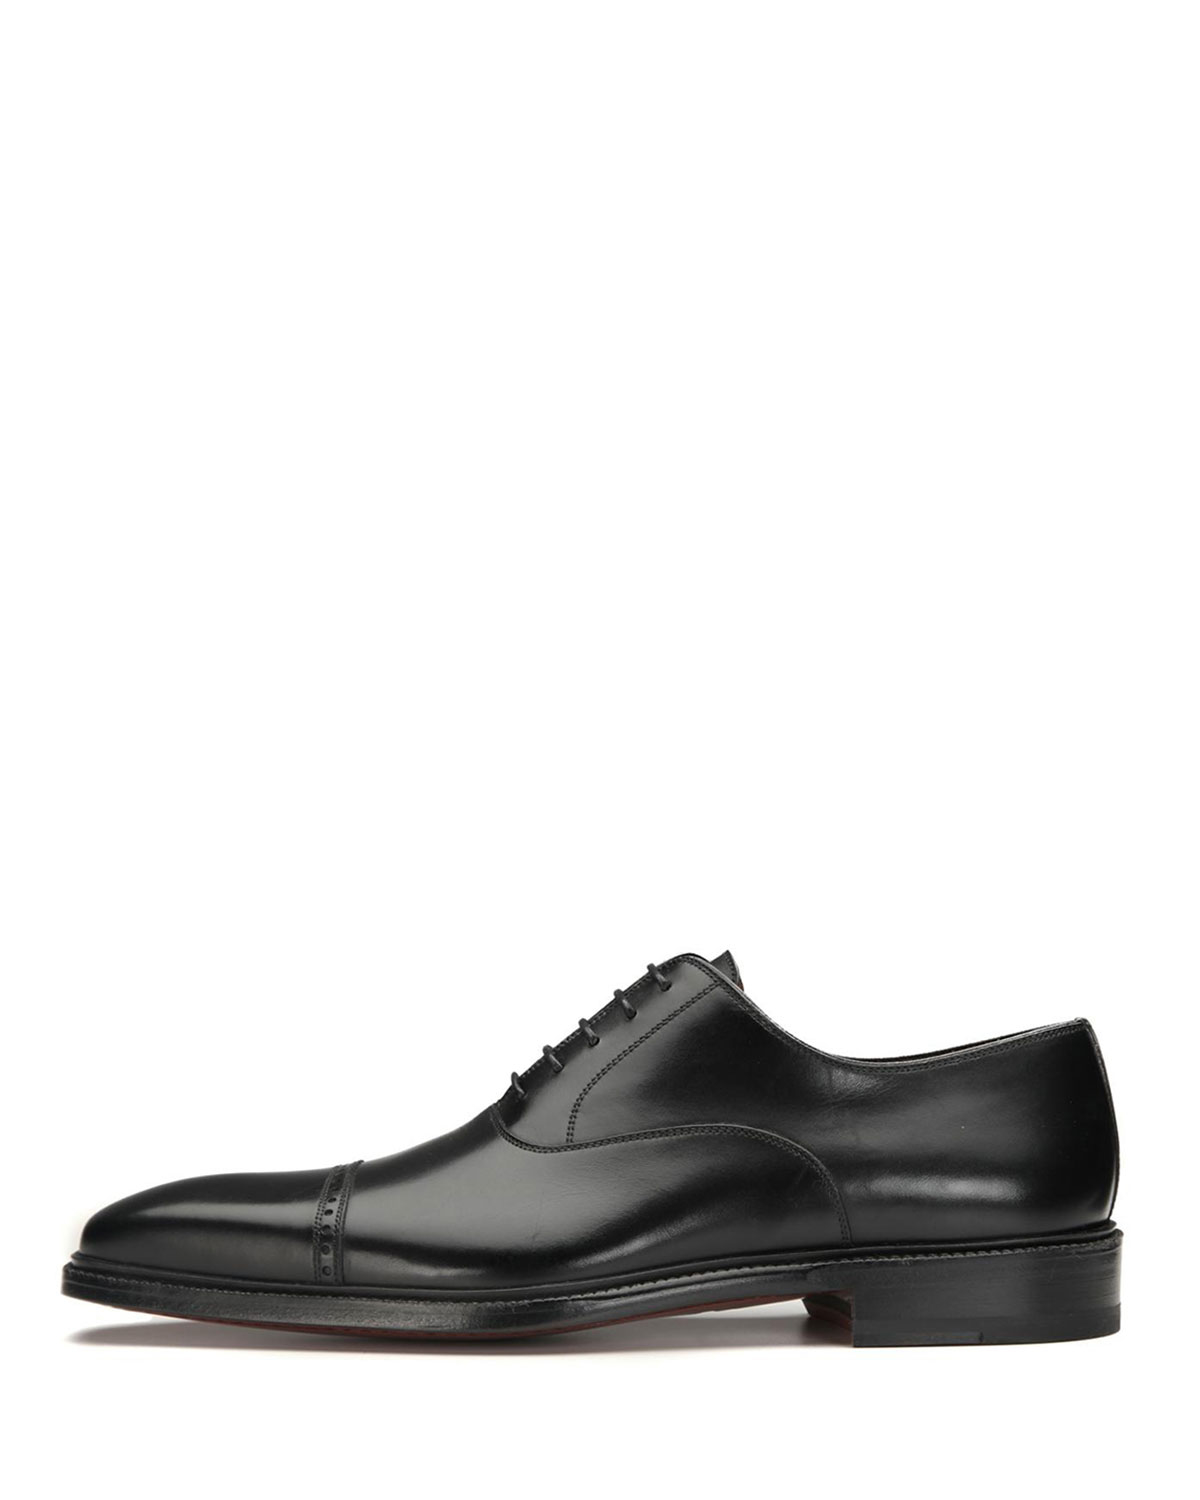 Lyst - Neiman Marcus Cap-toe Leather Oxford Shoe in Black for Men